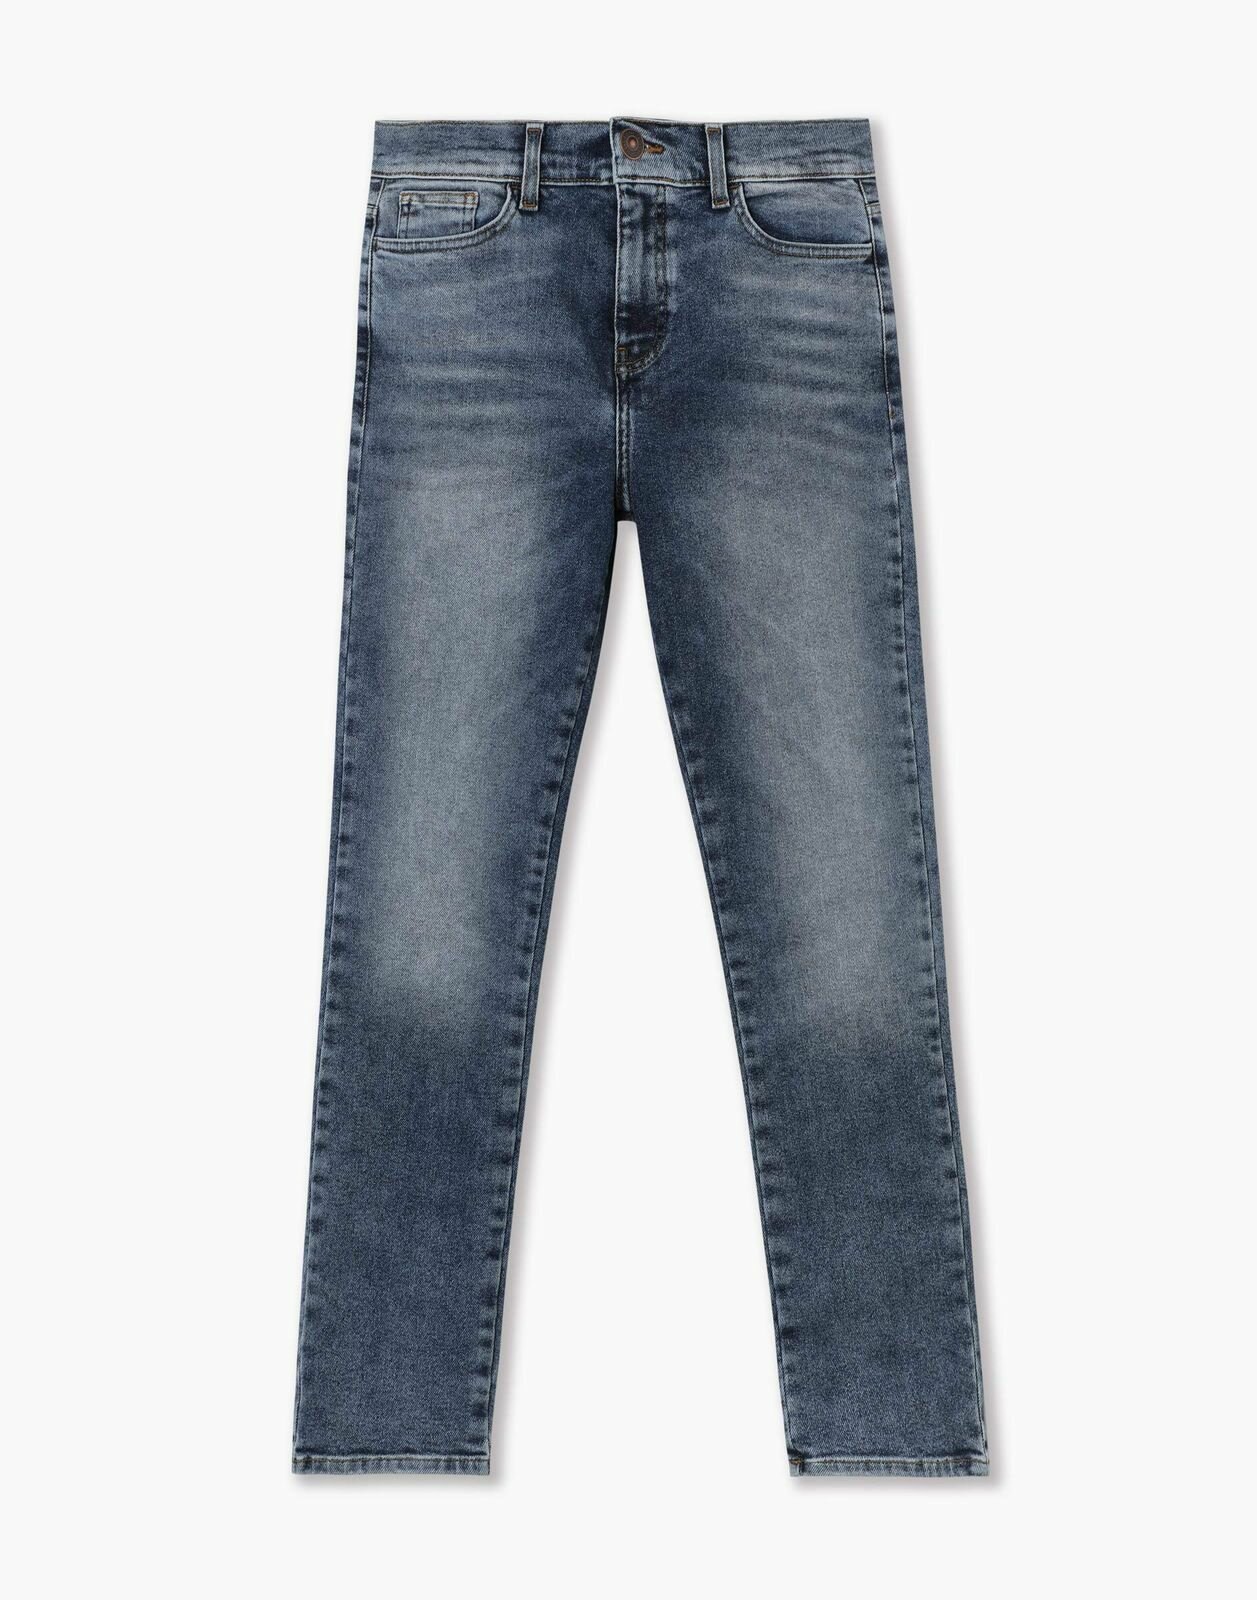 Джинсы Gloria Jeans, размер 7-8л/128, синий